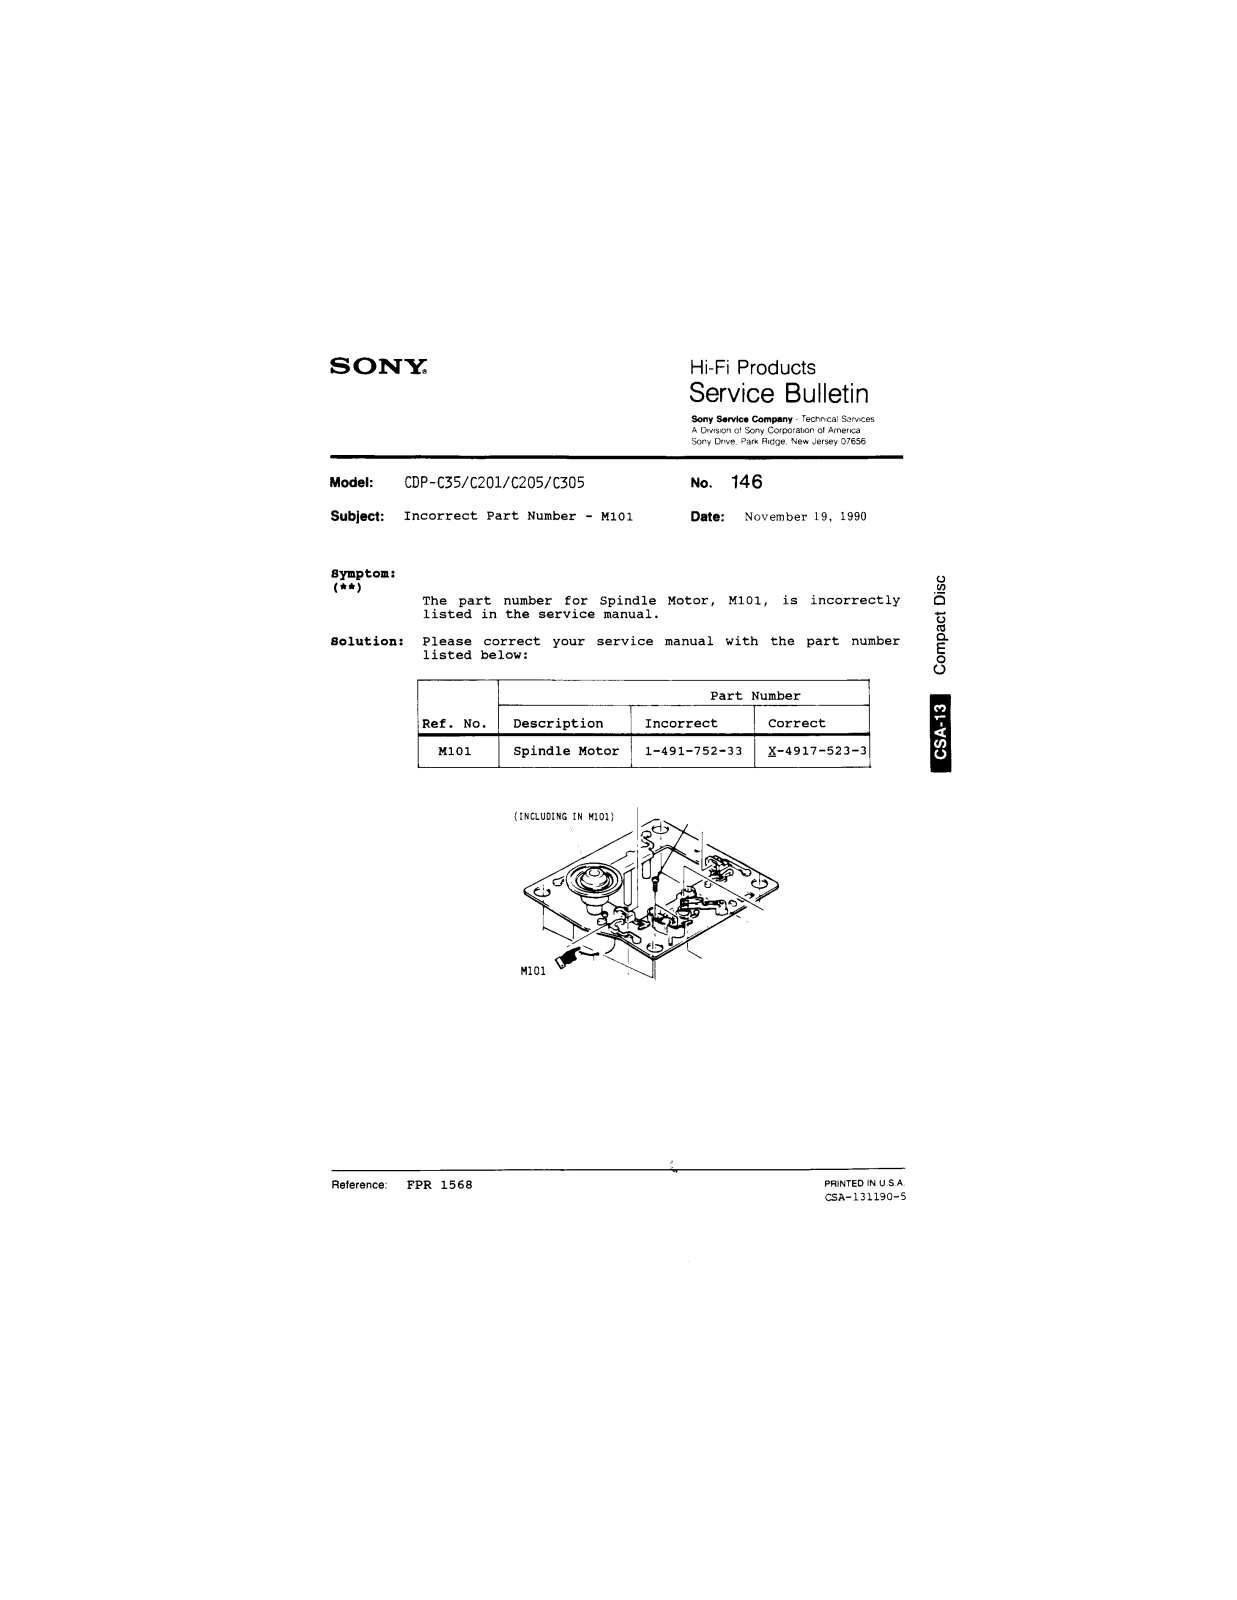 Sony CDP-C35, CDP-C201, CDP-C205, CDP-C305 Service Manual